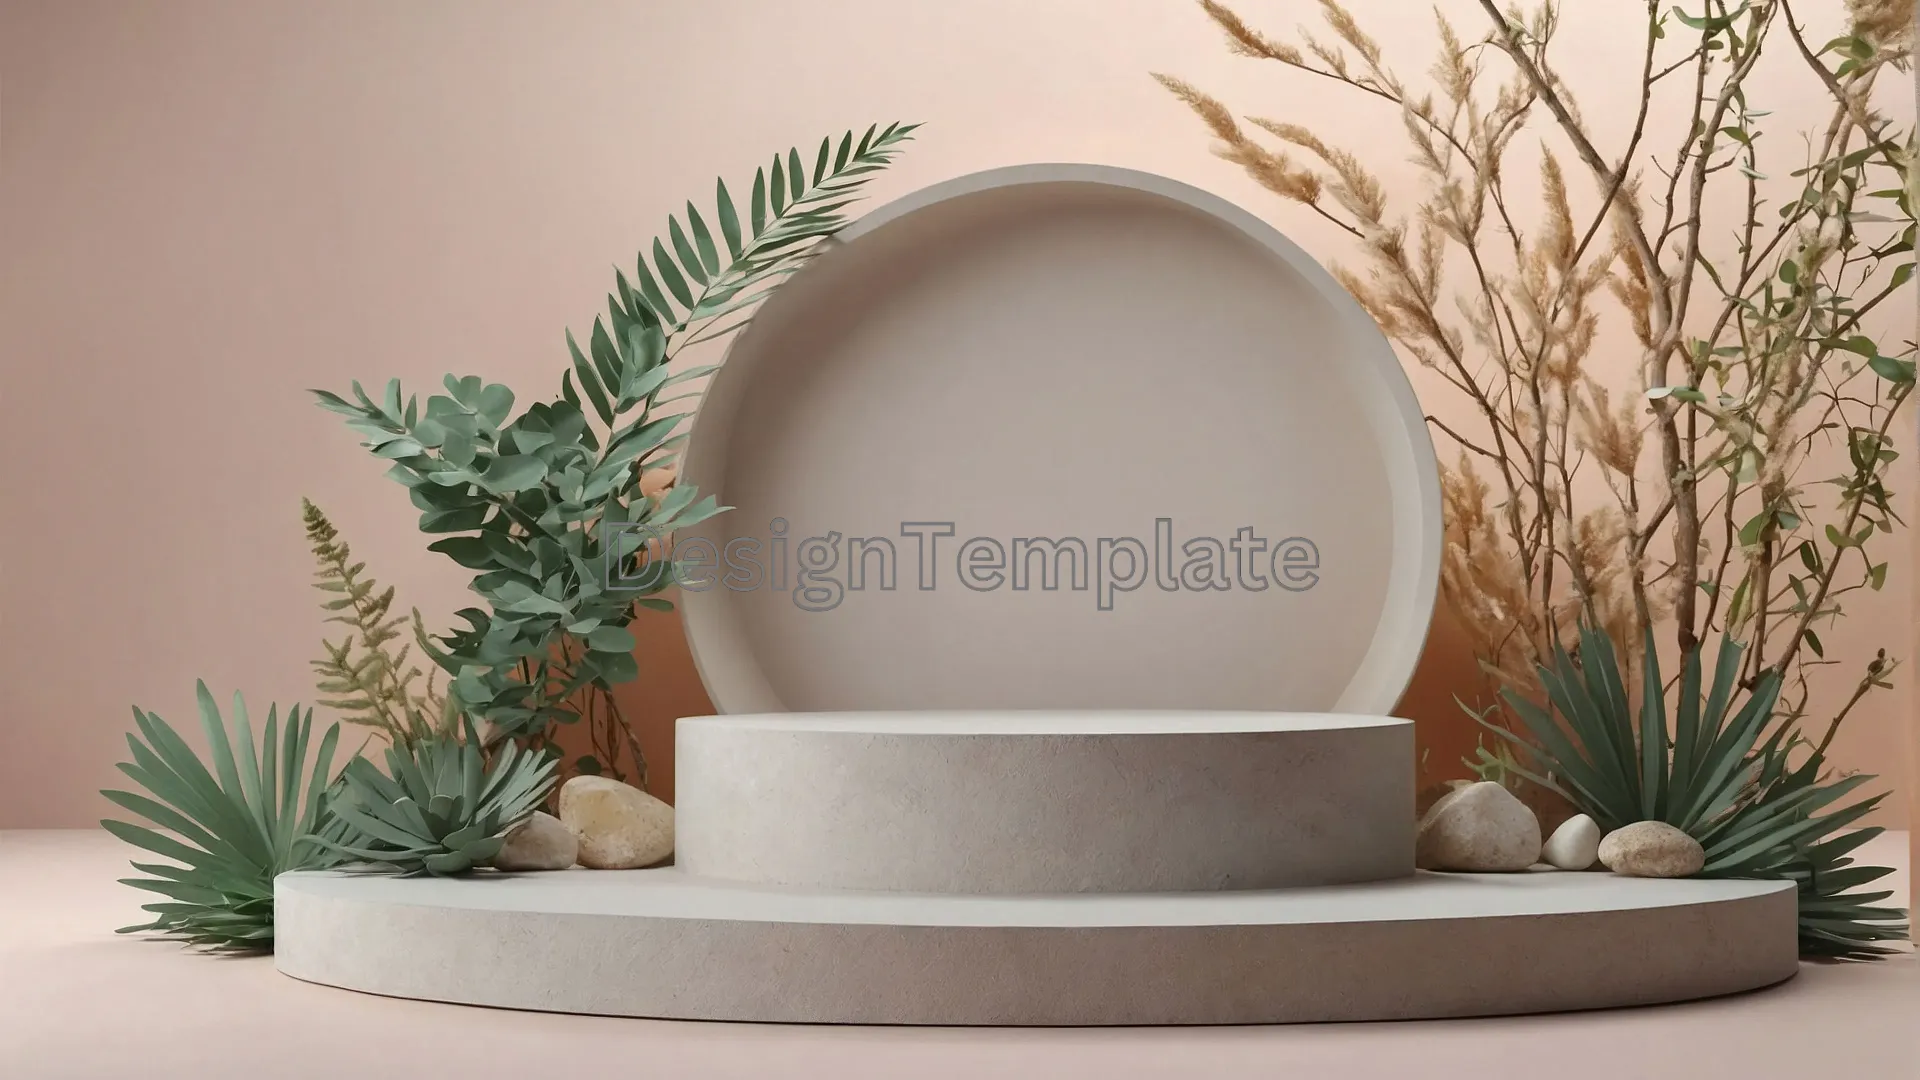 Detailed Plant Frame Texture Background Photo image